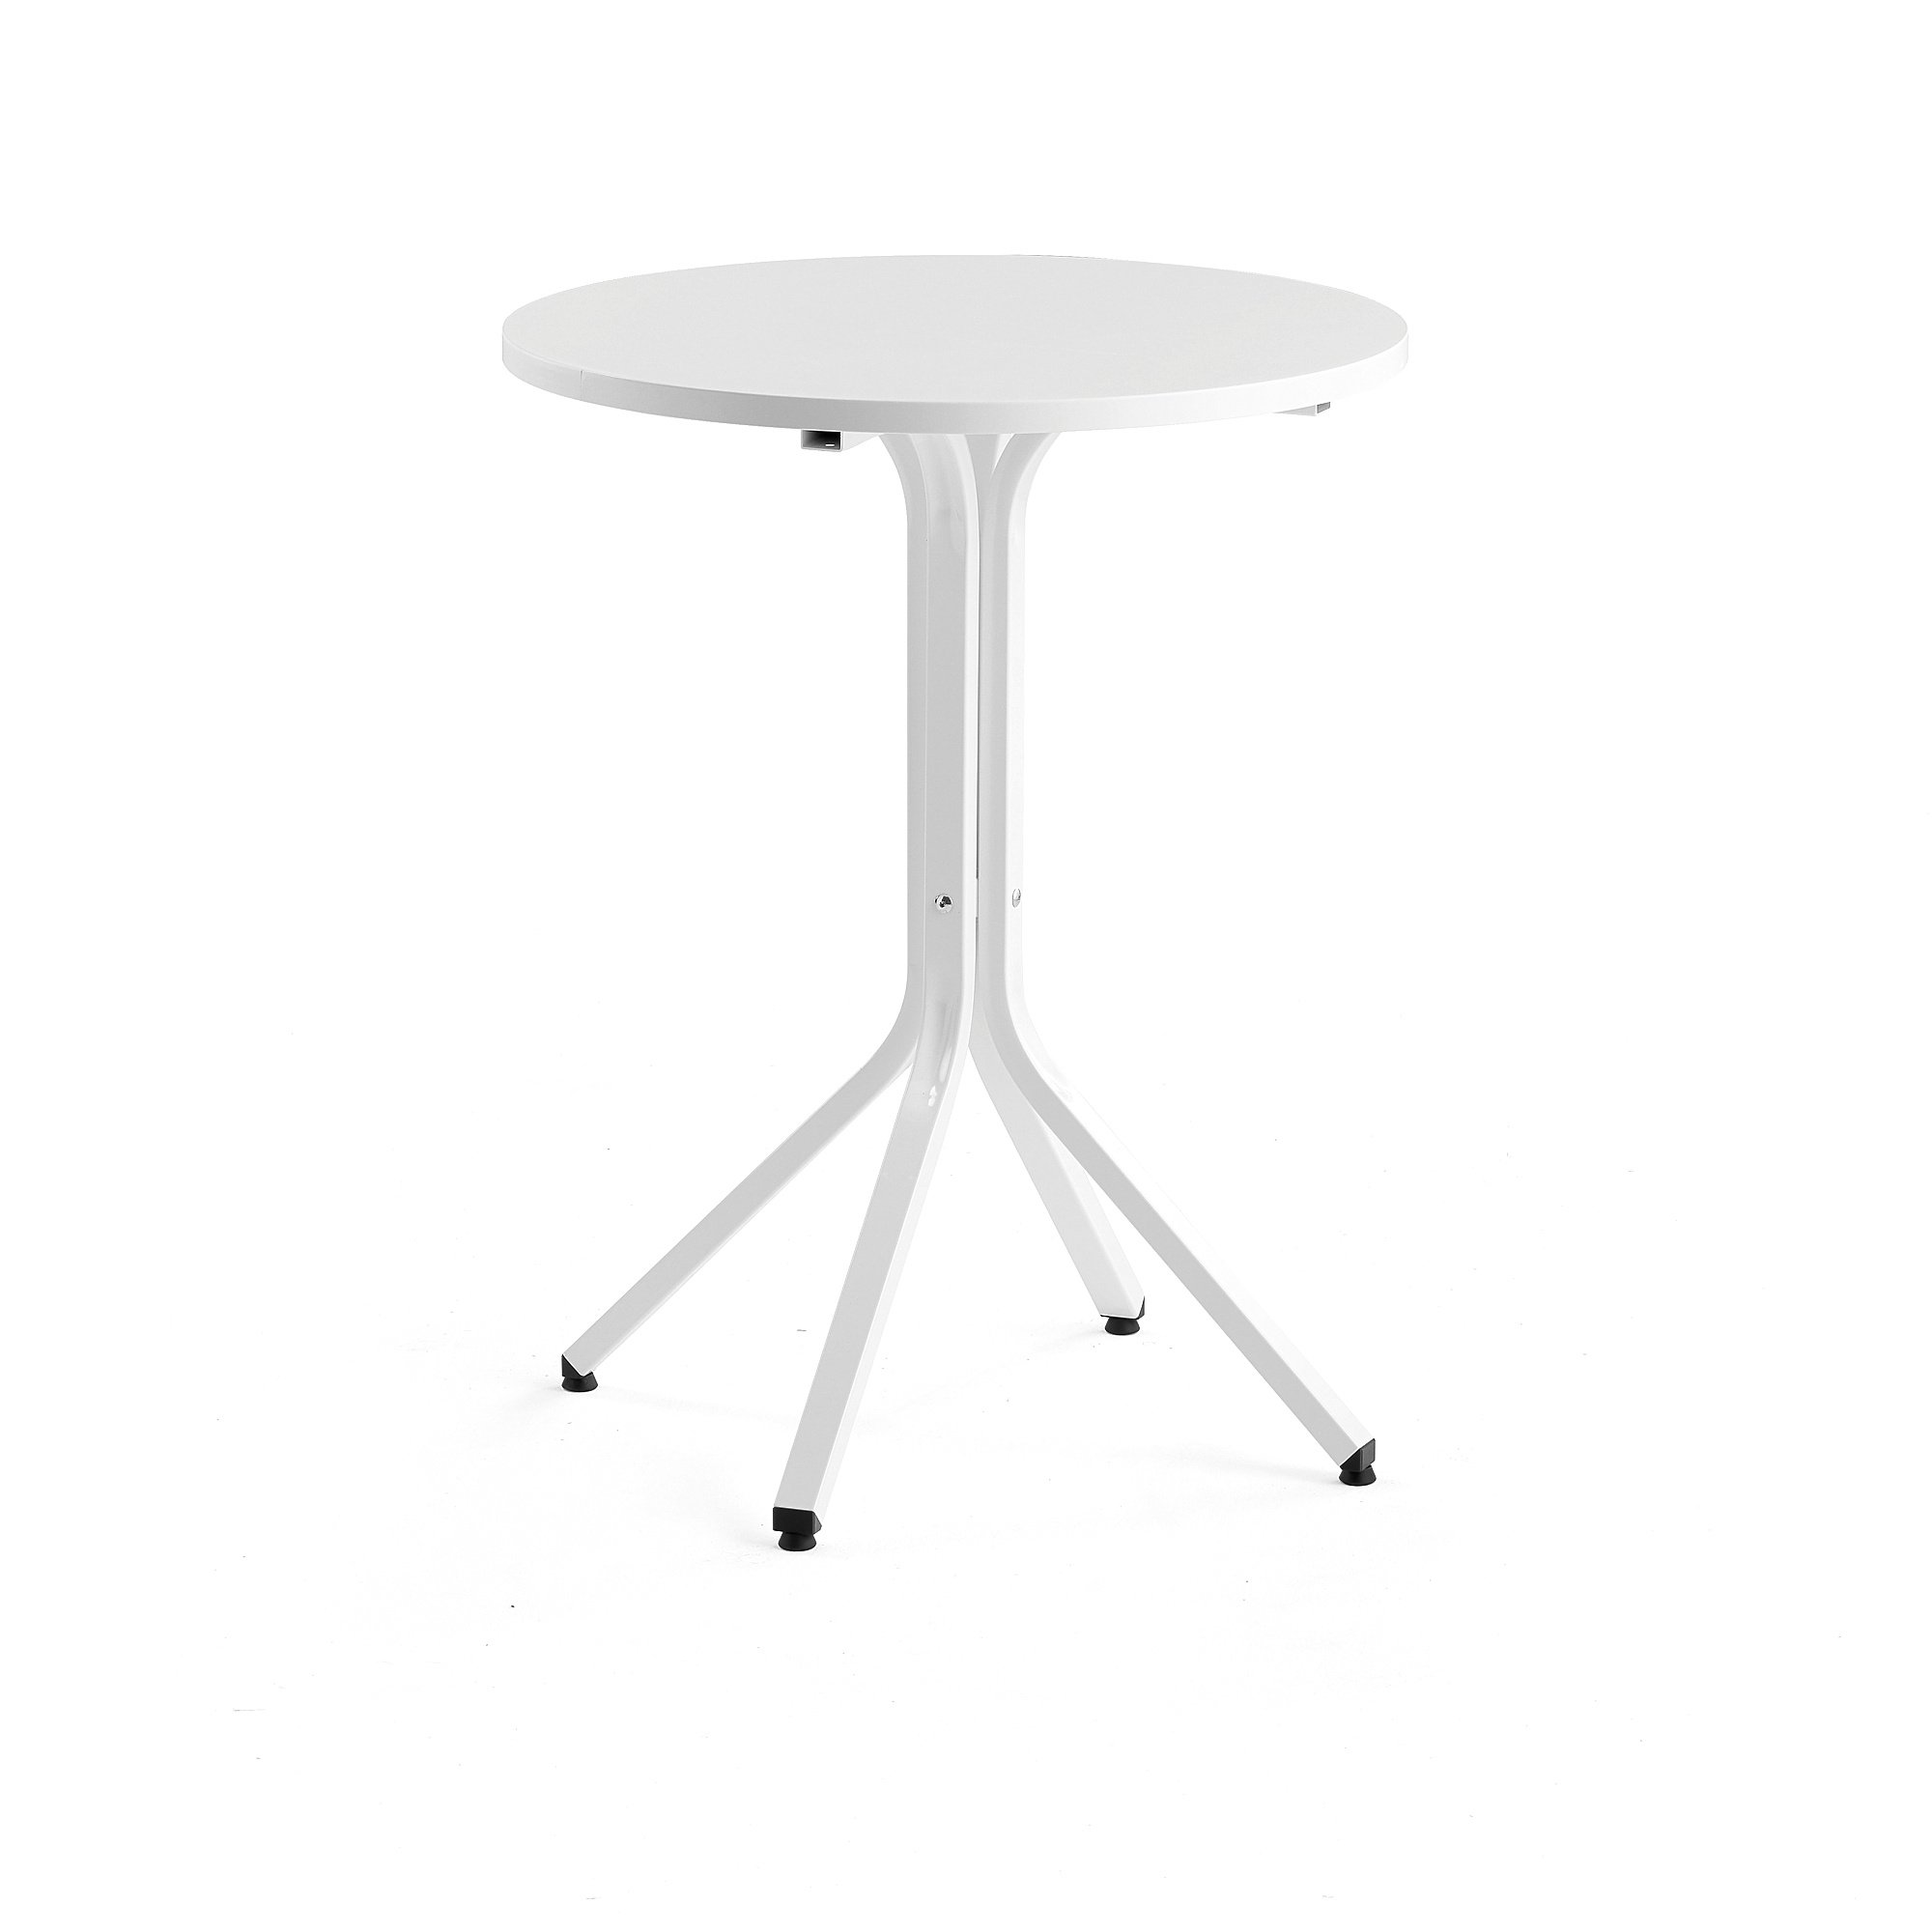 Stůl VARIOUS, Ø700 mm, výška 900 mm, bílá, bílá